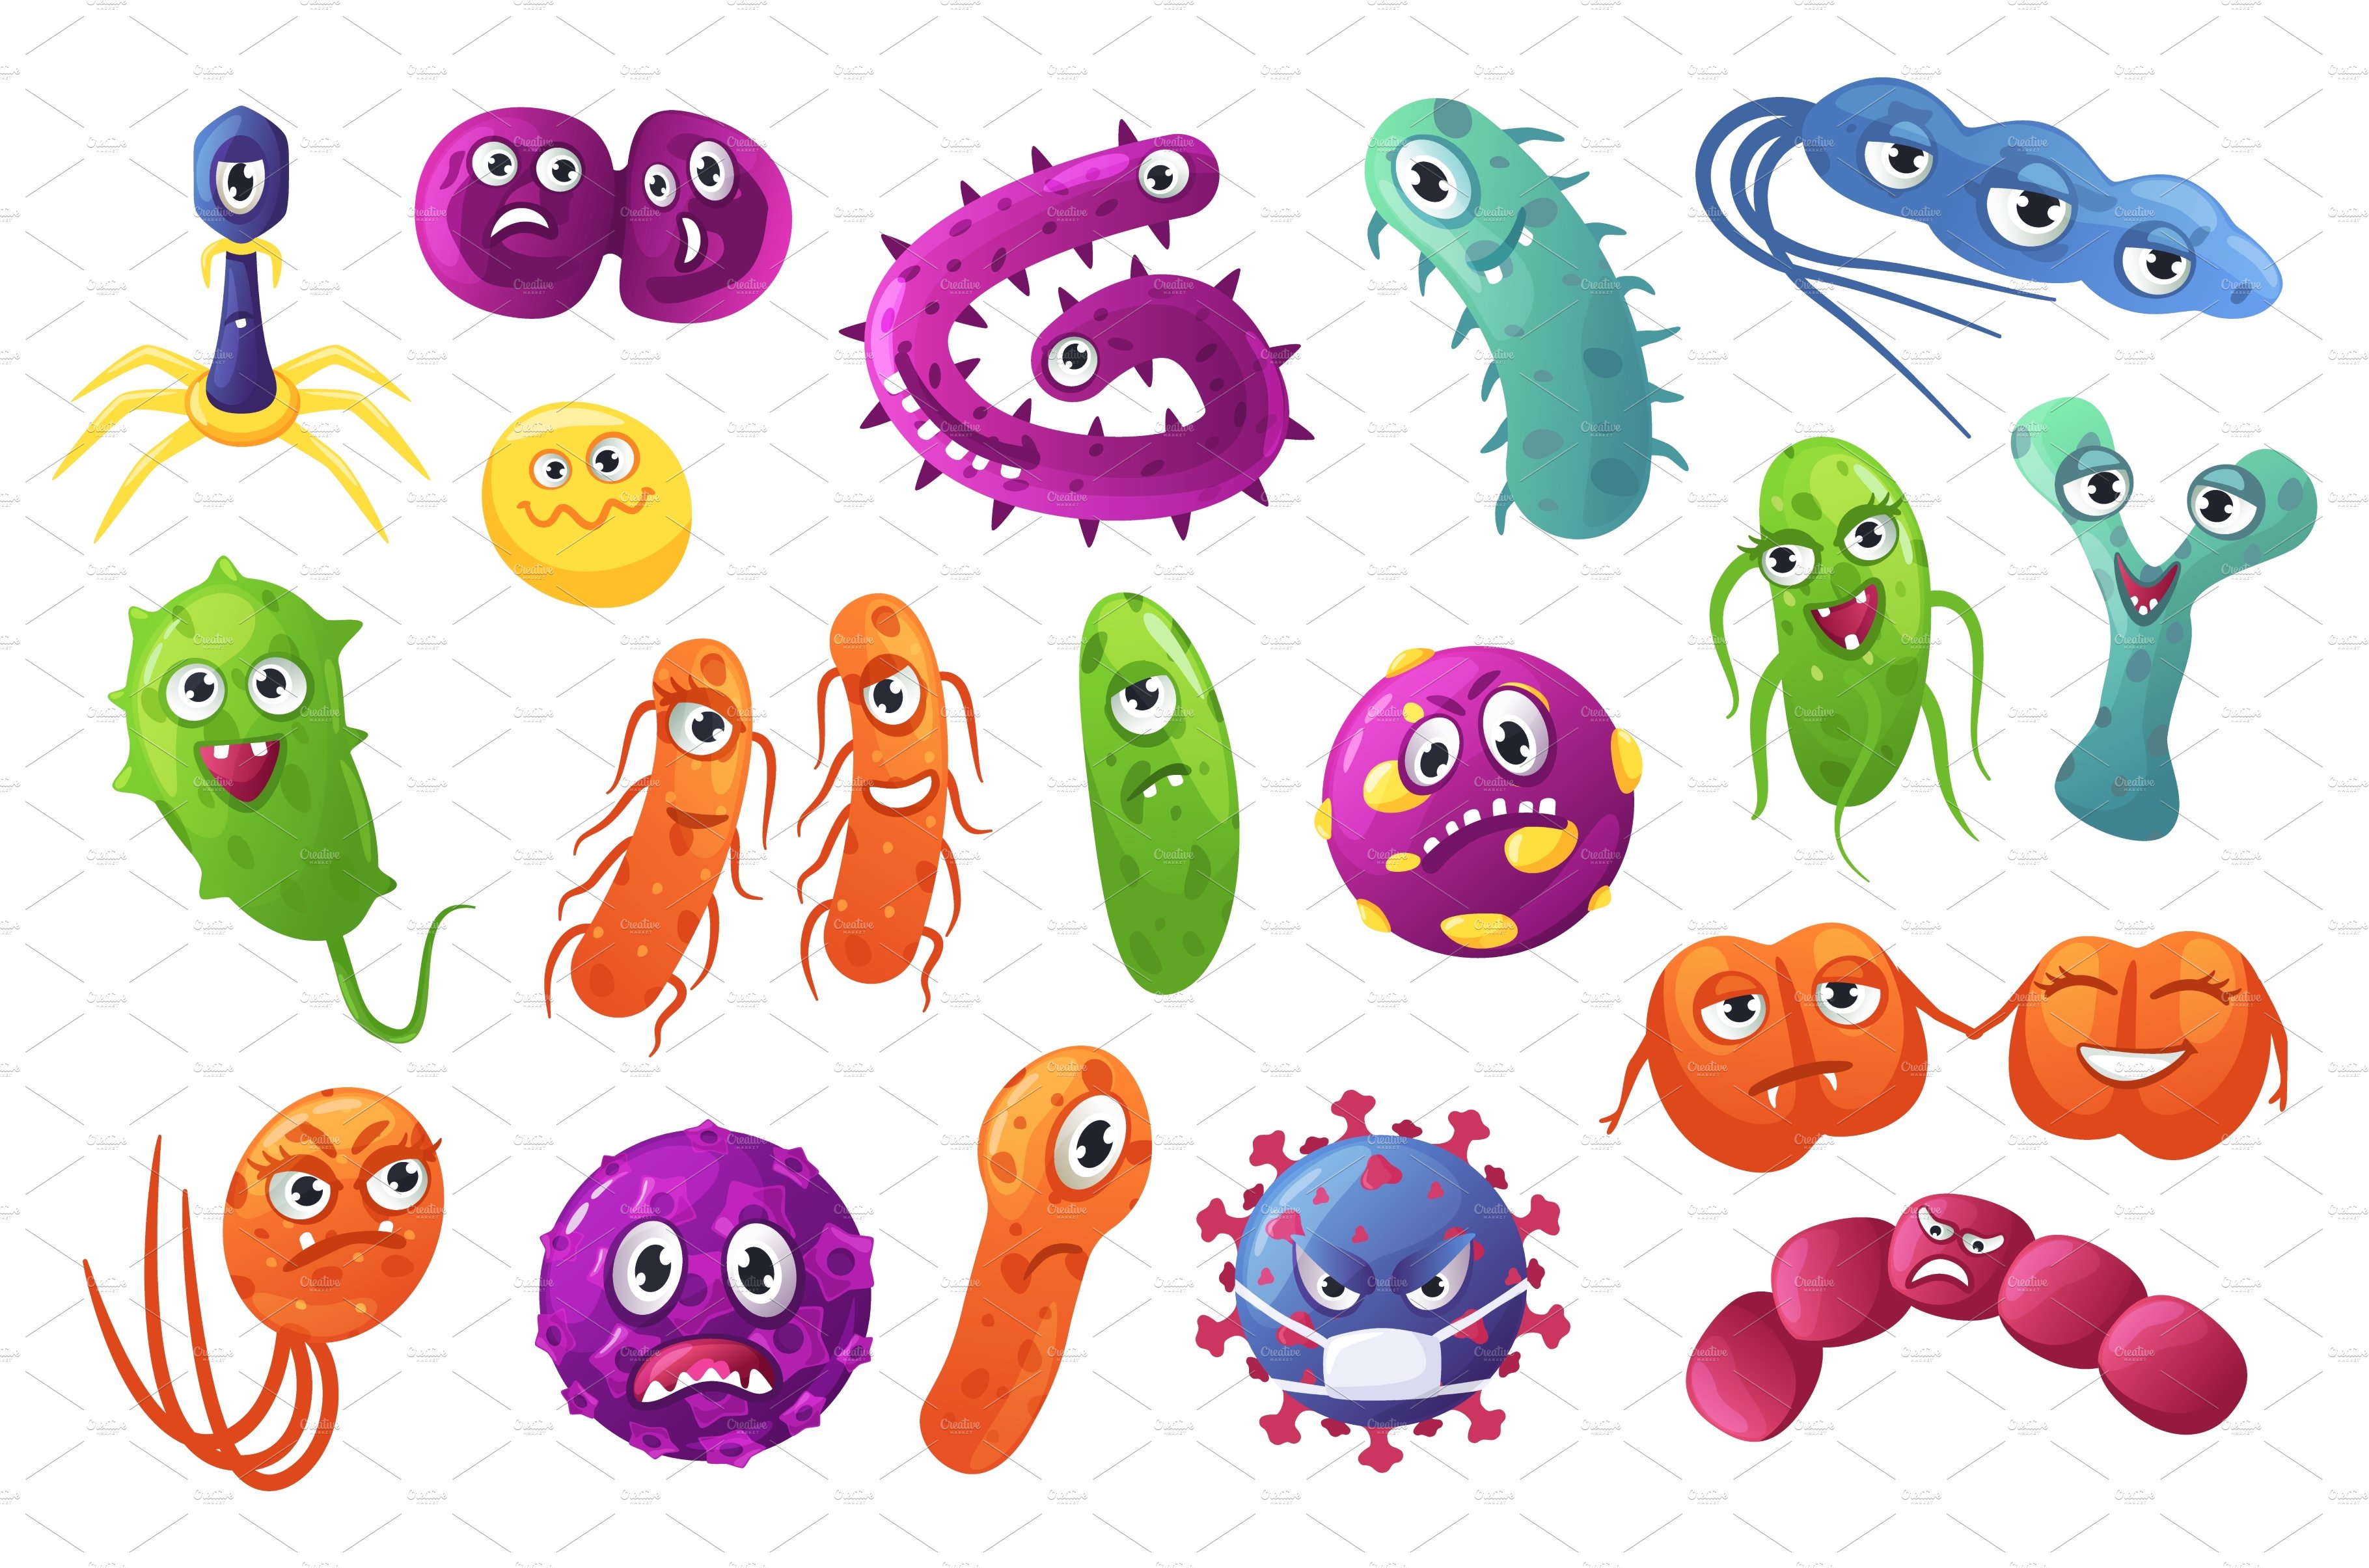 cartoon bacteria